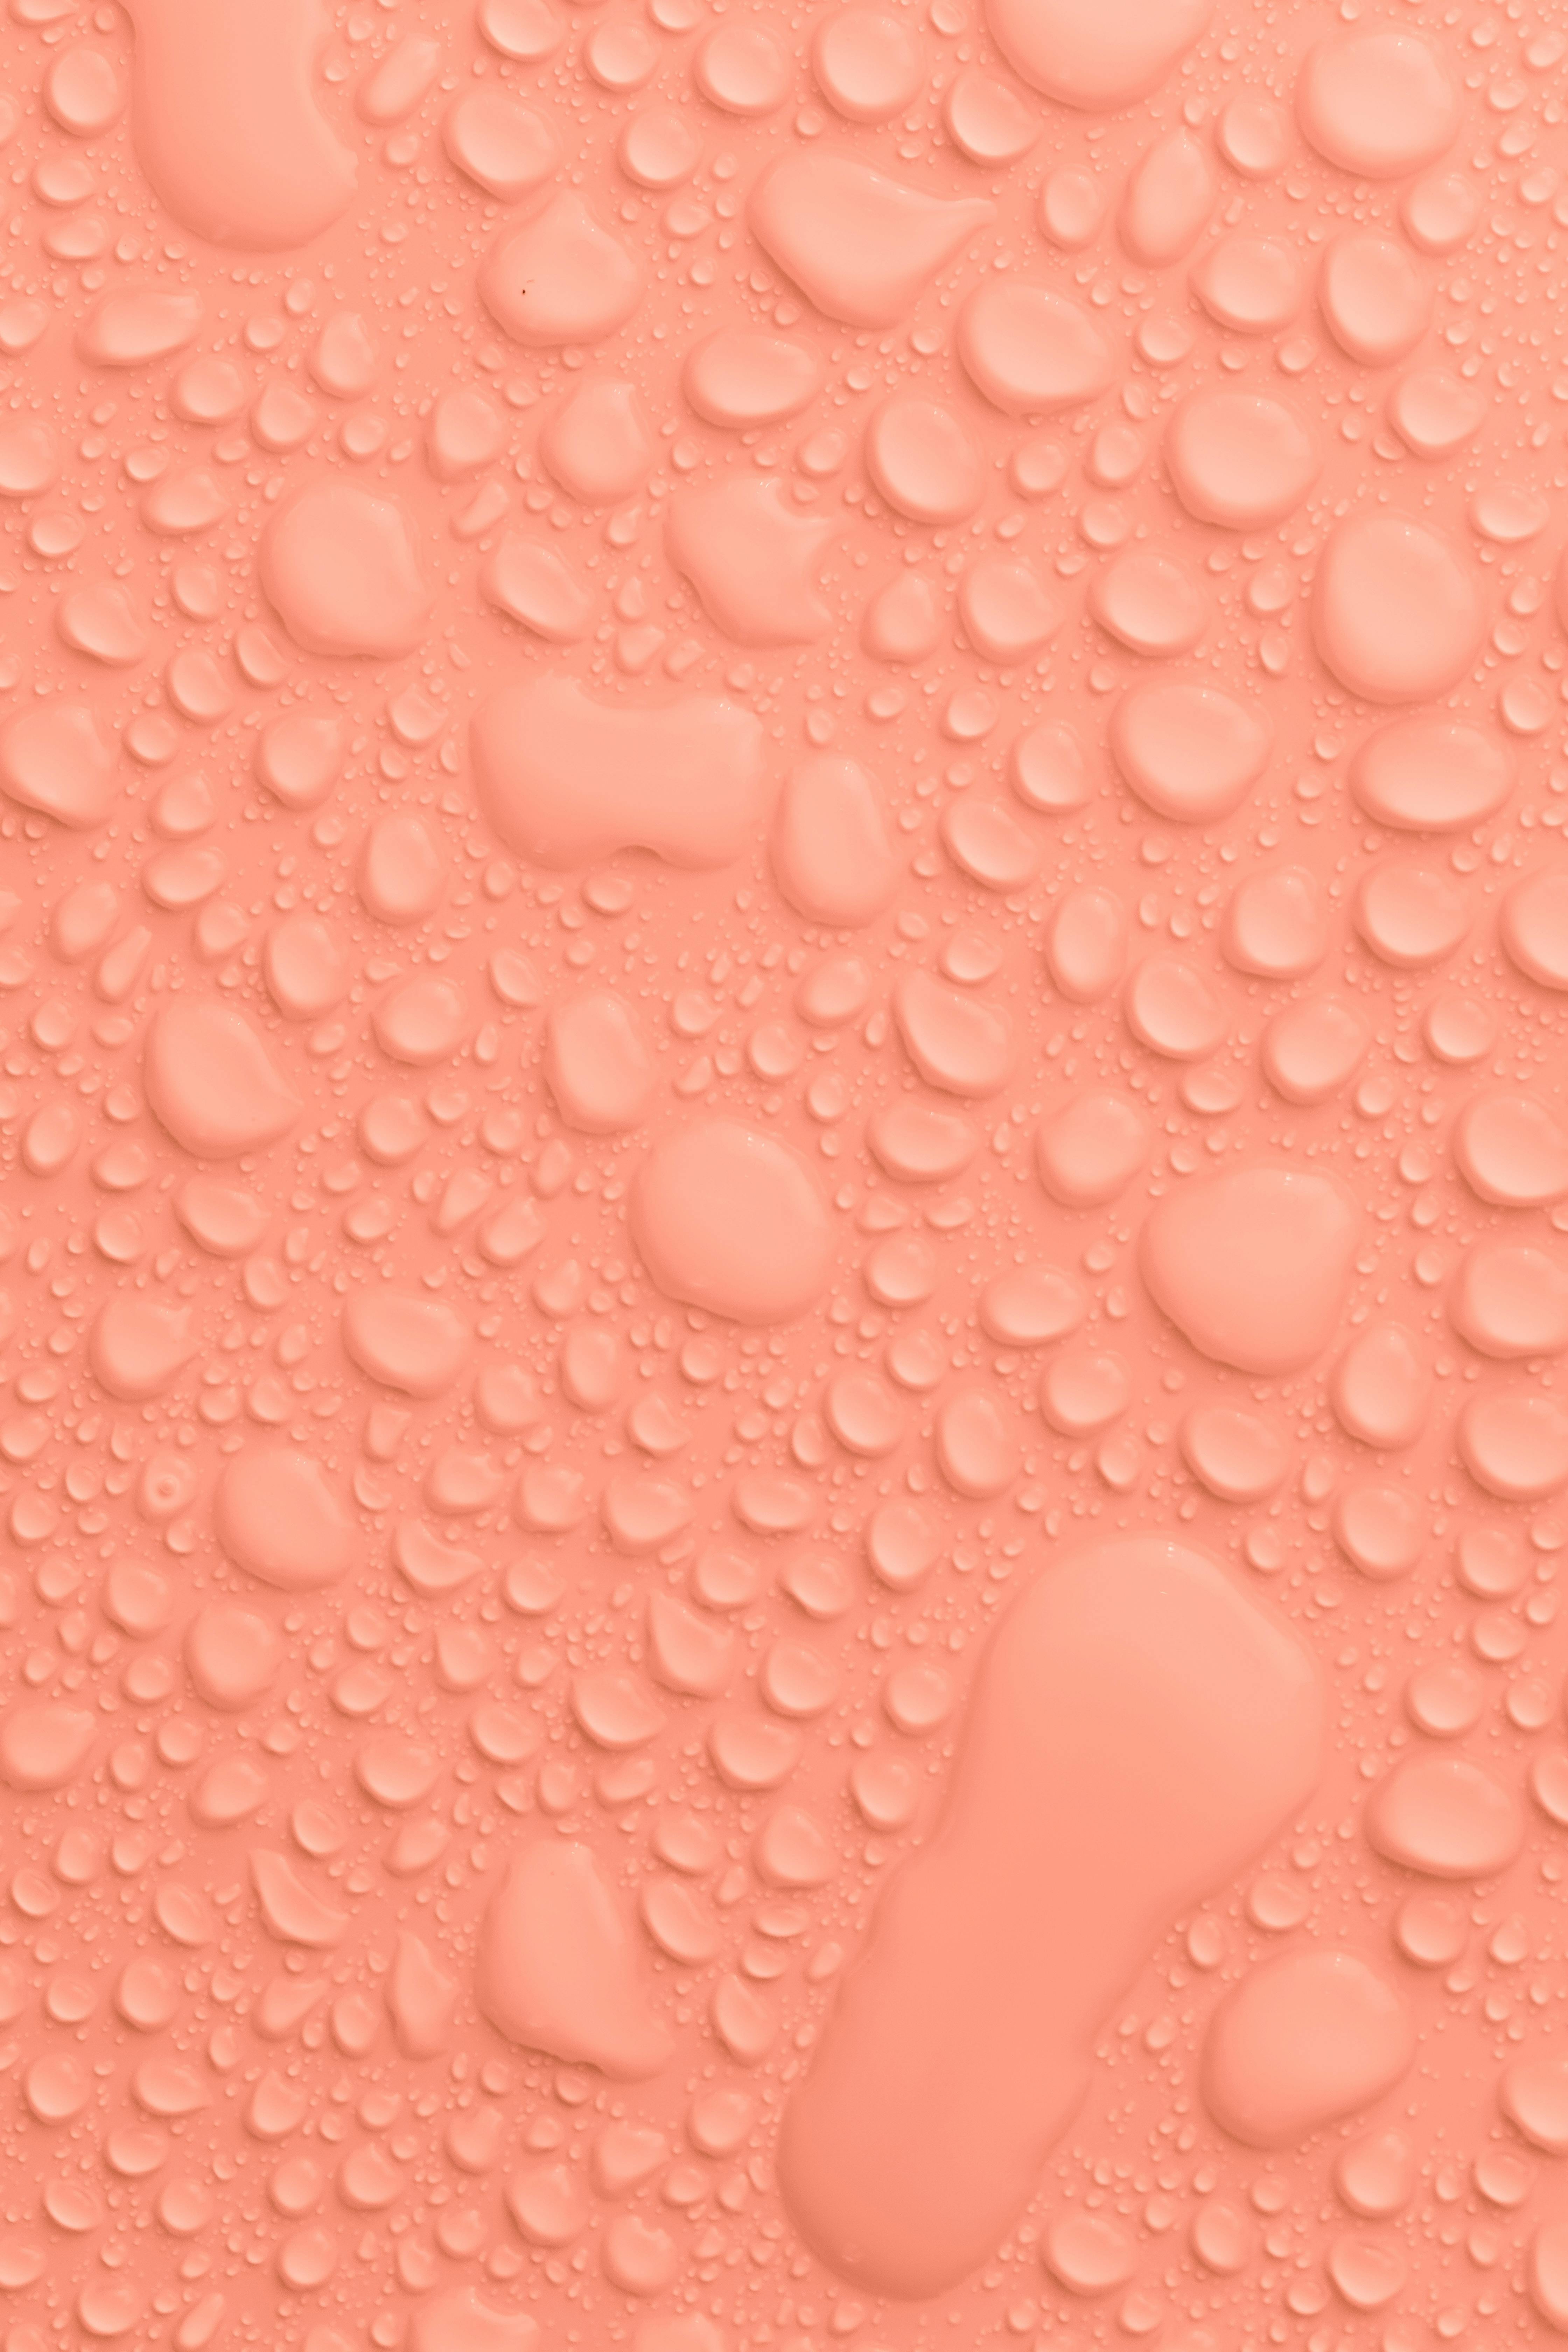 Plain Peach Pastel Orange Pink Background Stock Photo - Image of